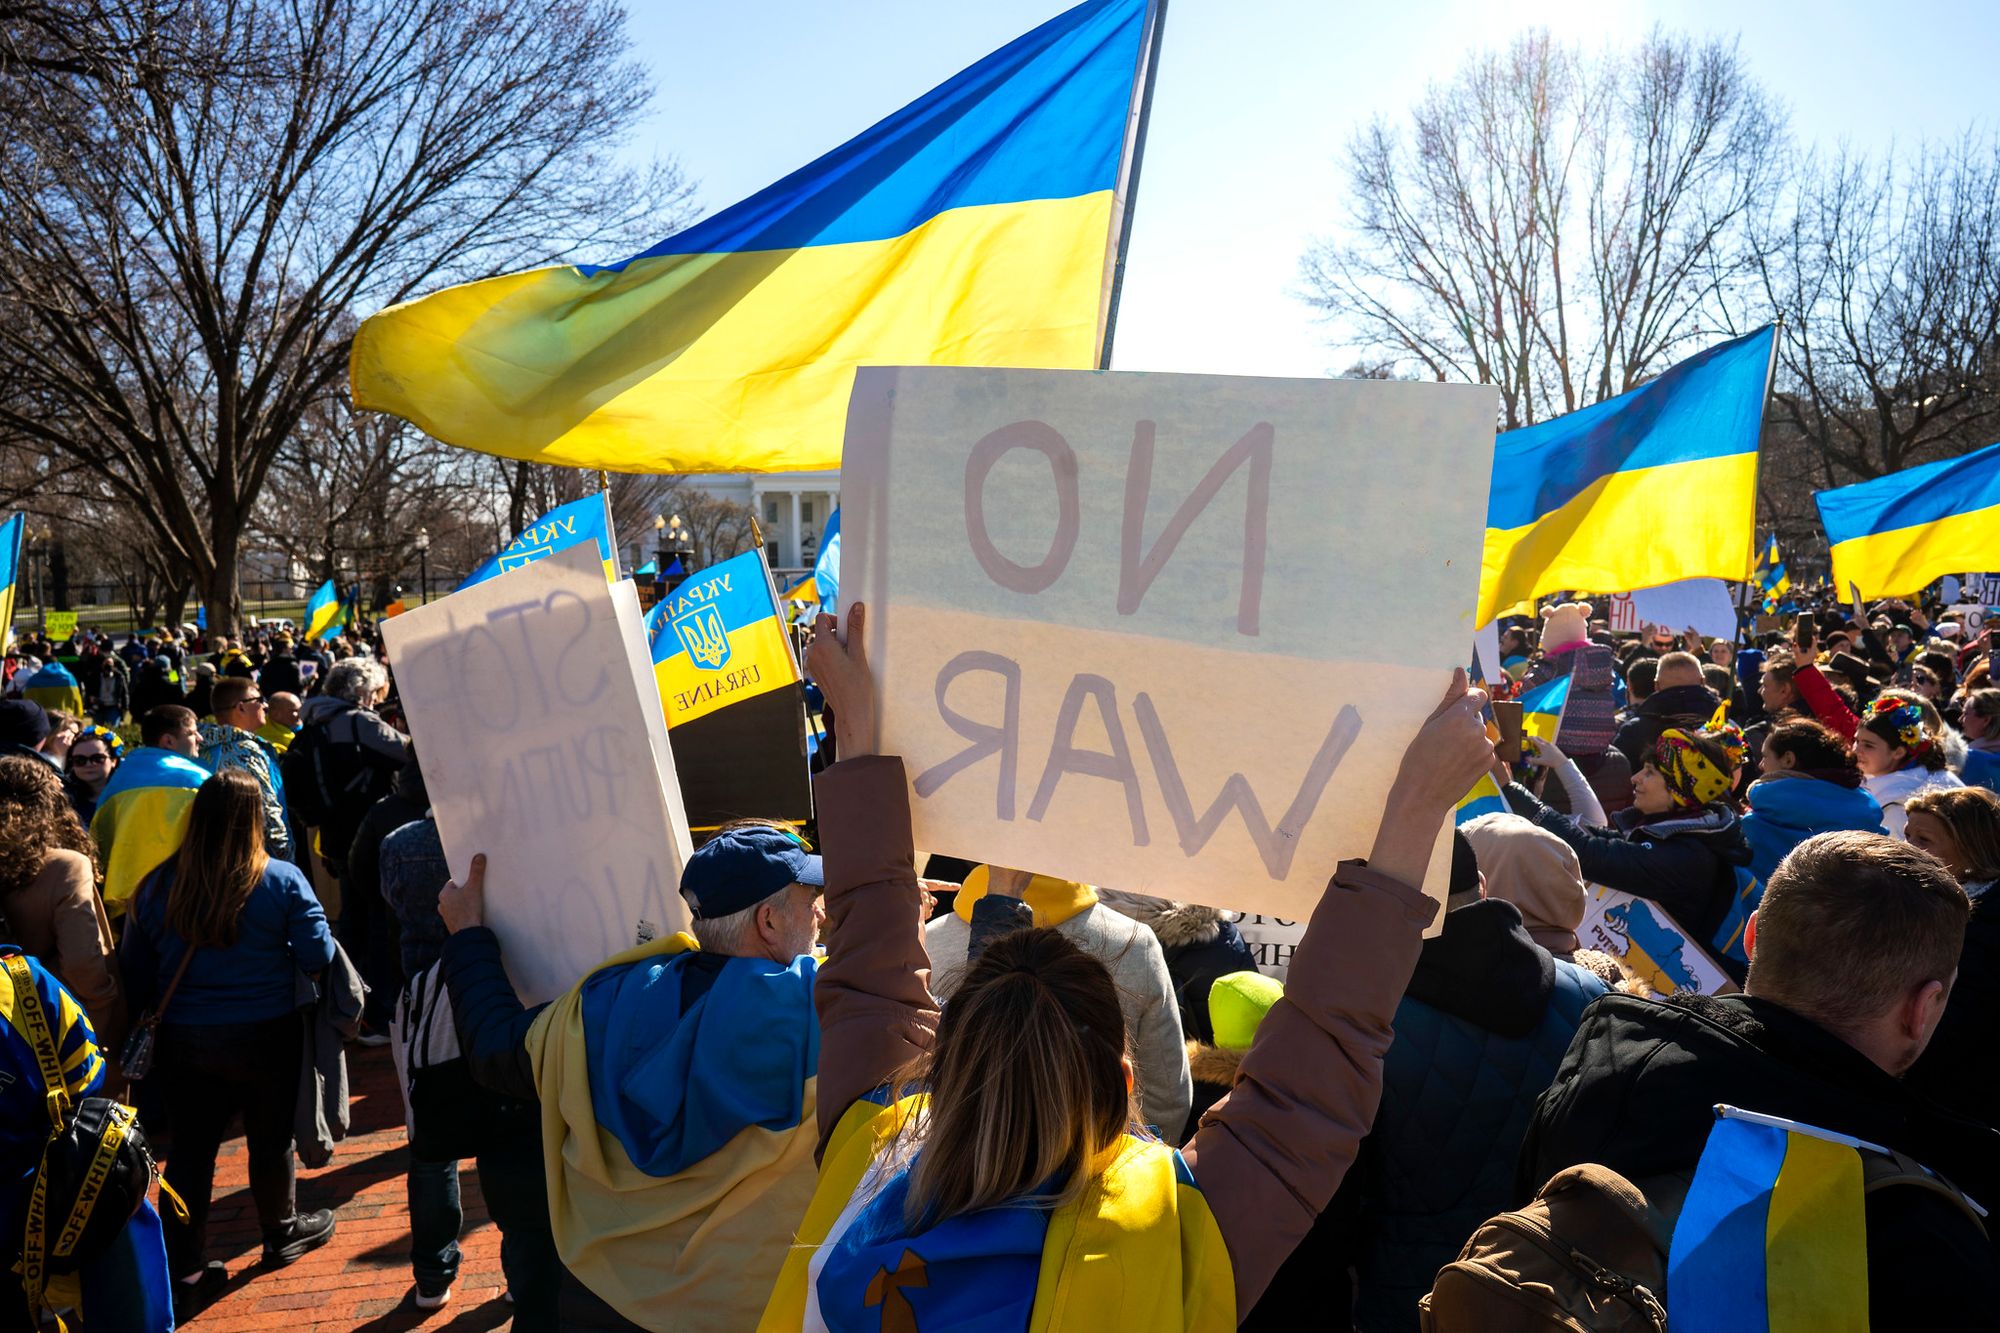 Should Leftists Support Sending Weapons To Ukraine?